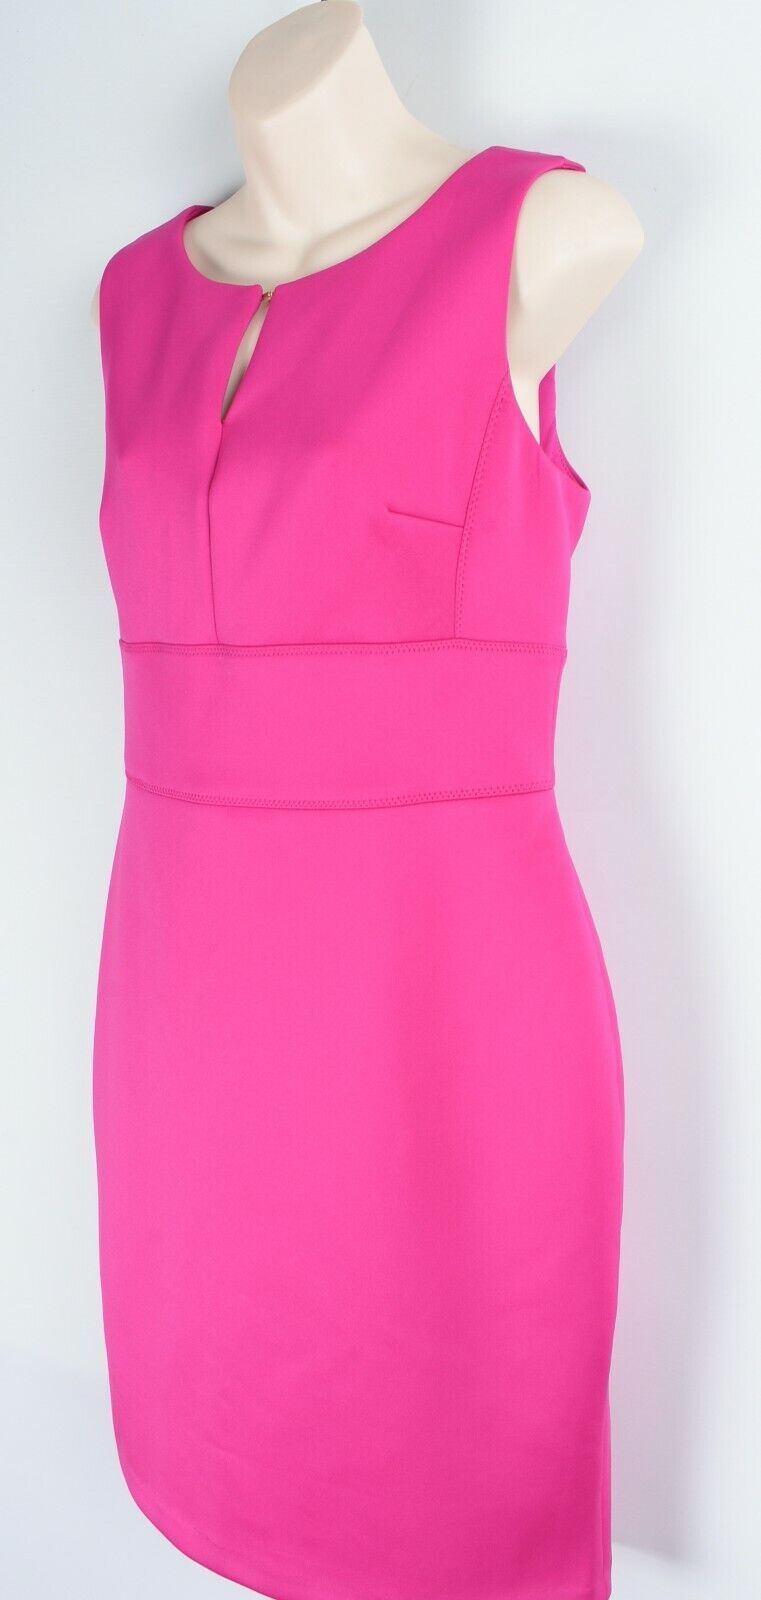 DKNY Women's Hot Pink Sheath Dress, size UK 14